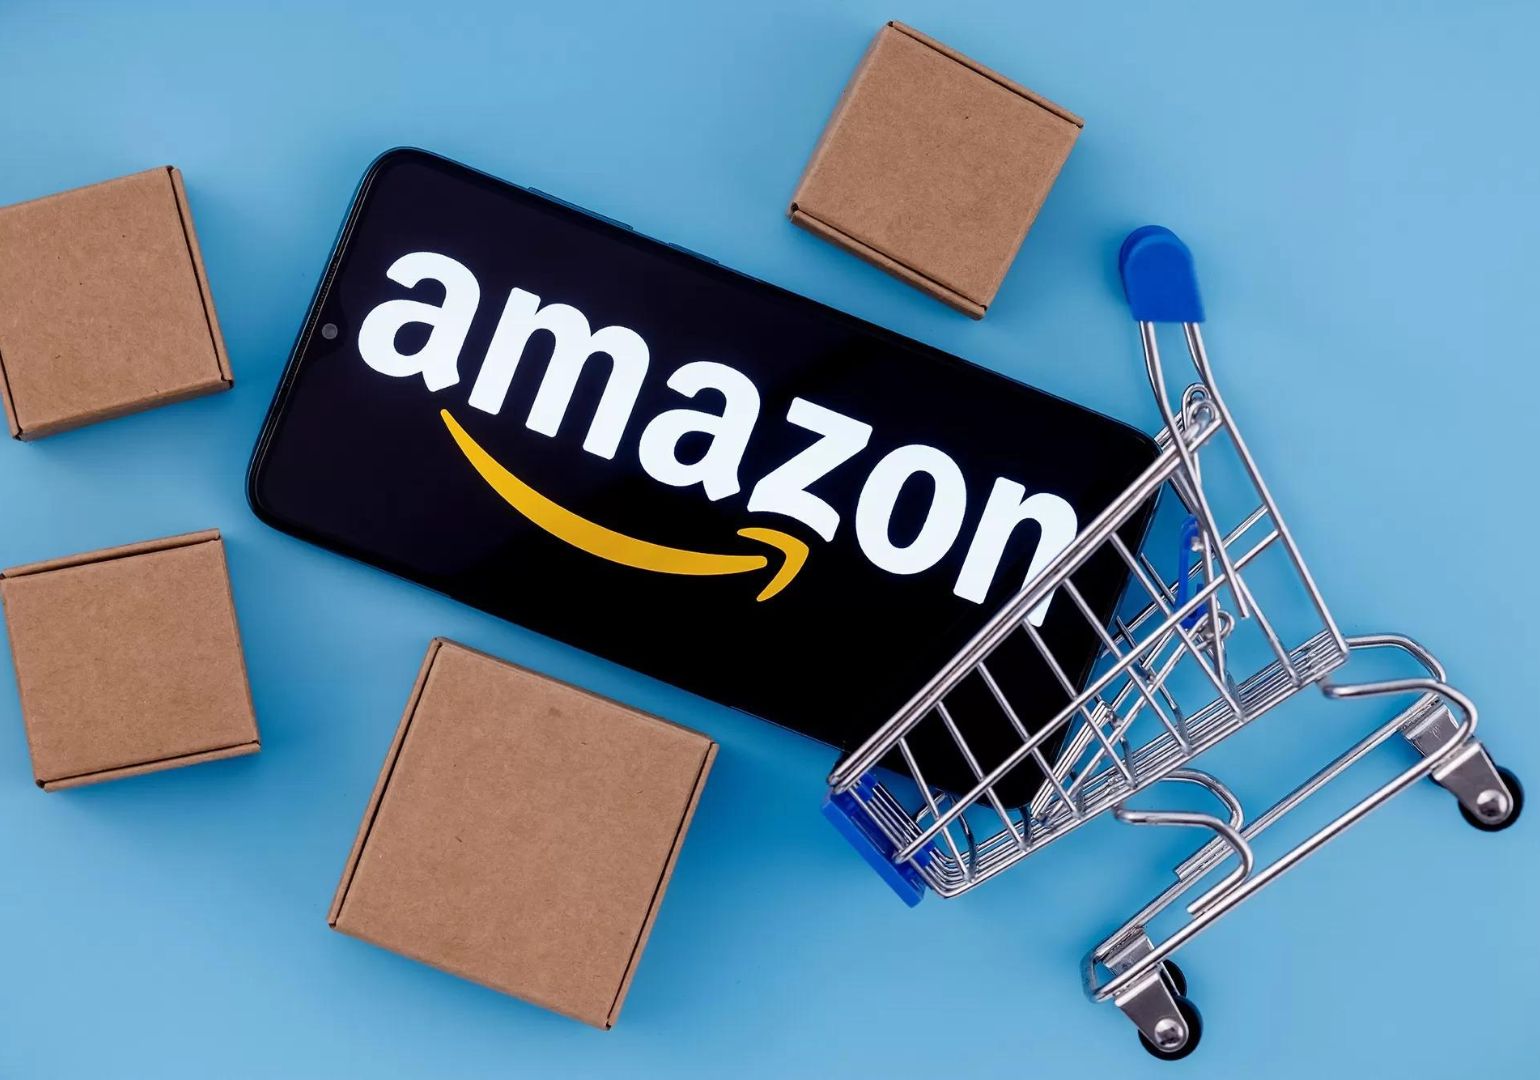 Amazon-მა 2021 წლის შემდეგ მოგების საუკეთესო მაჩვენებელი დააფიქსირა